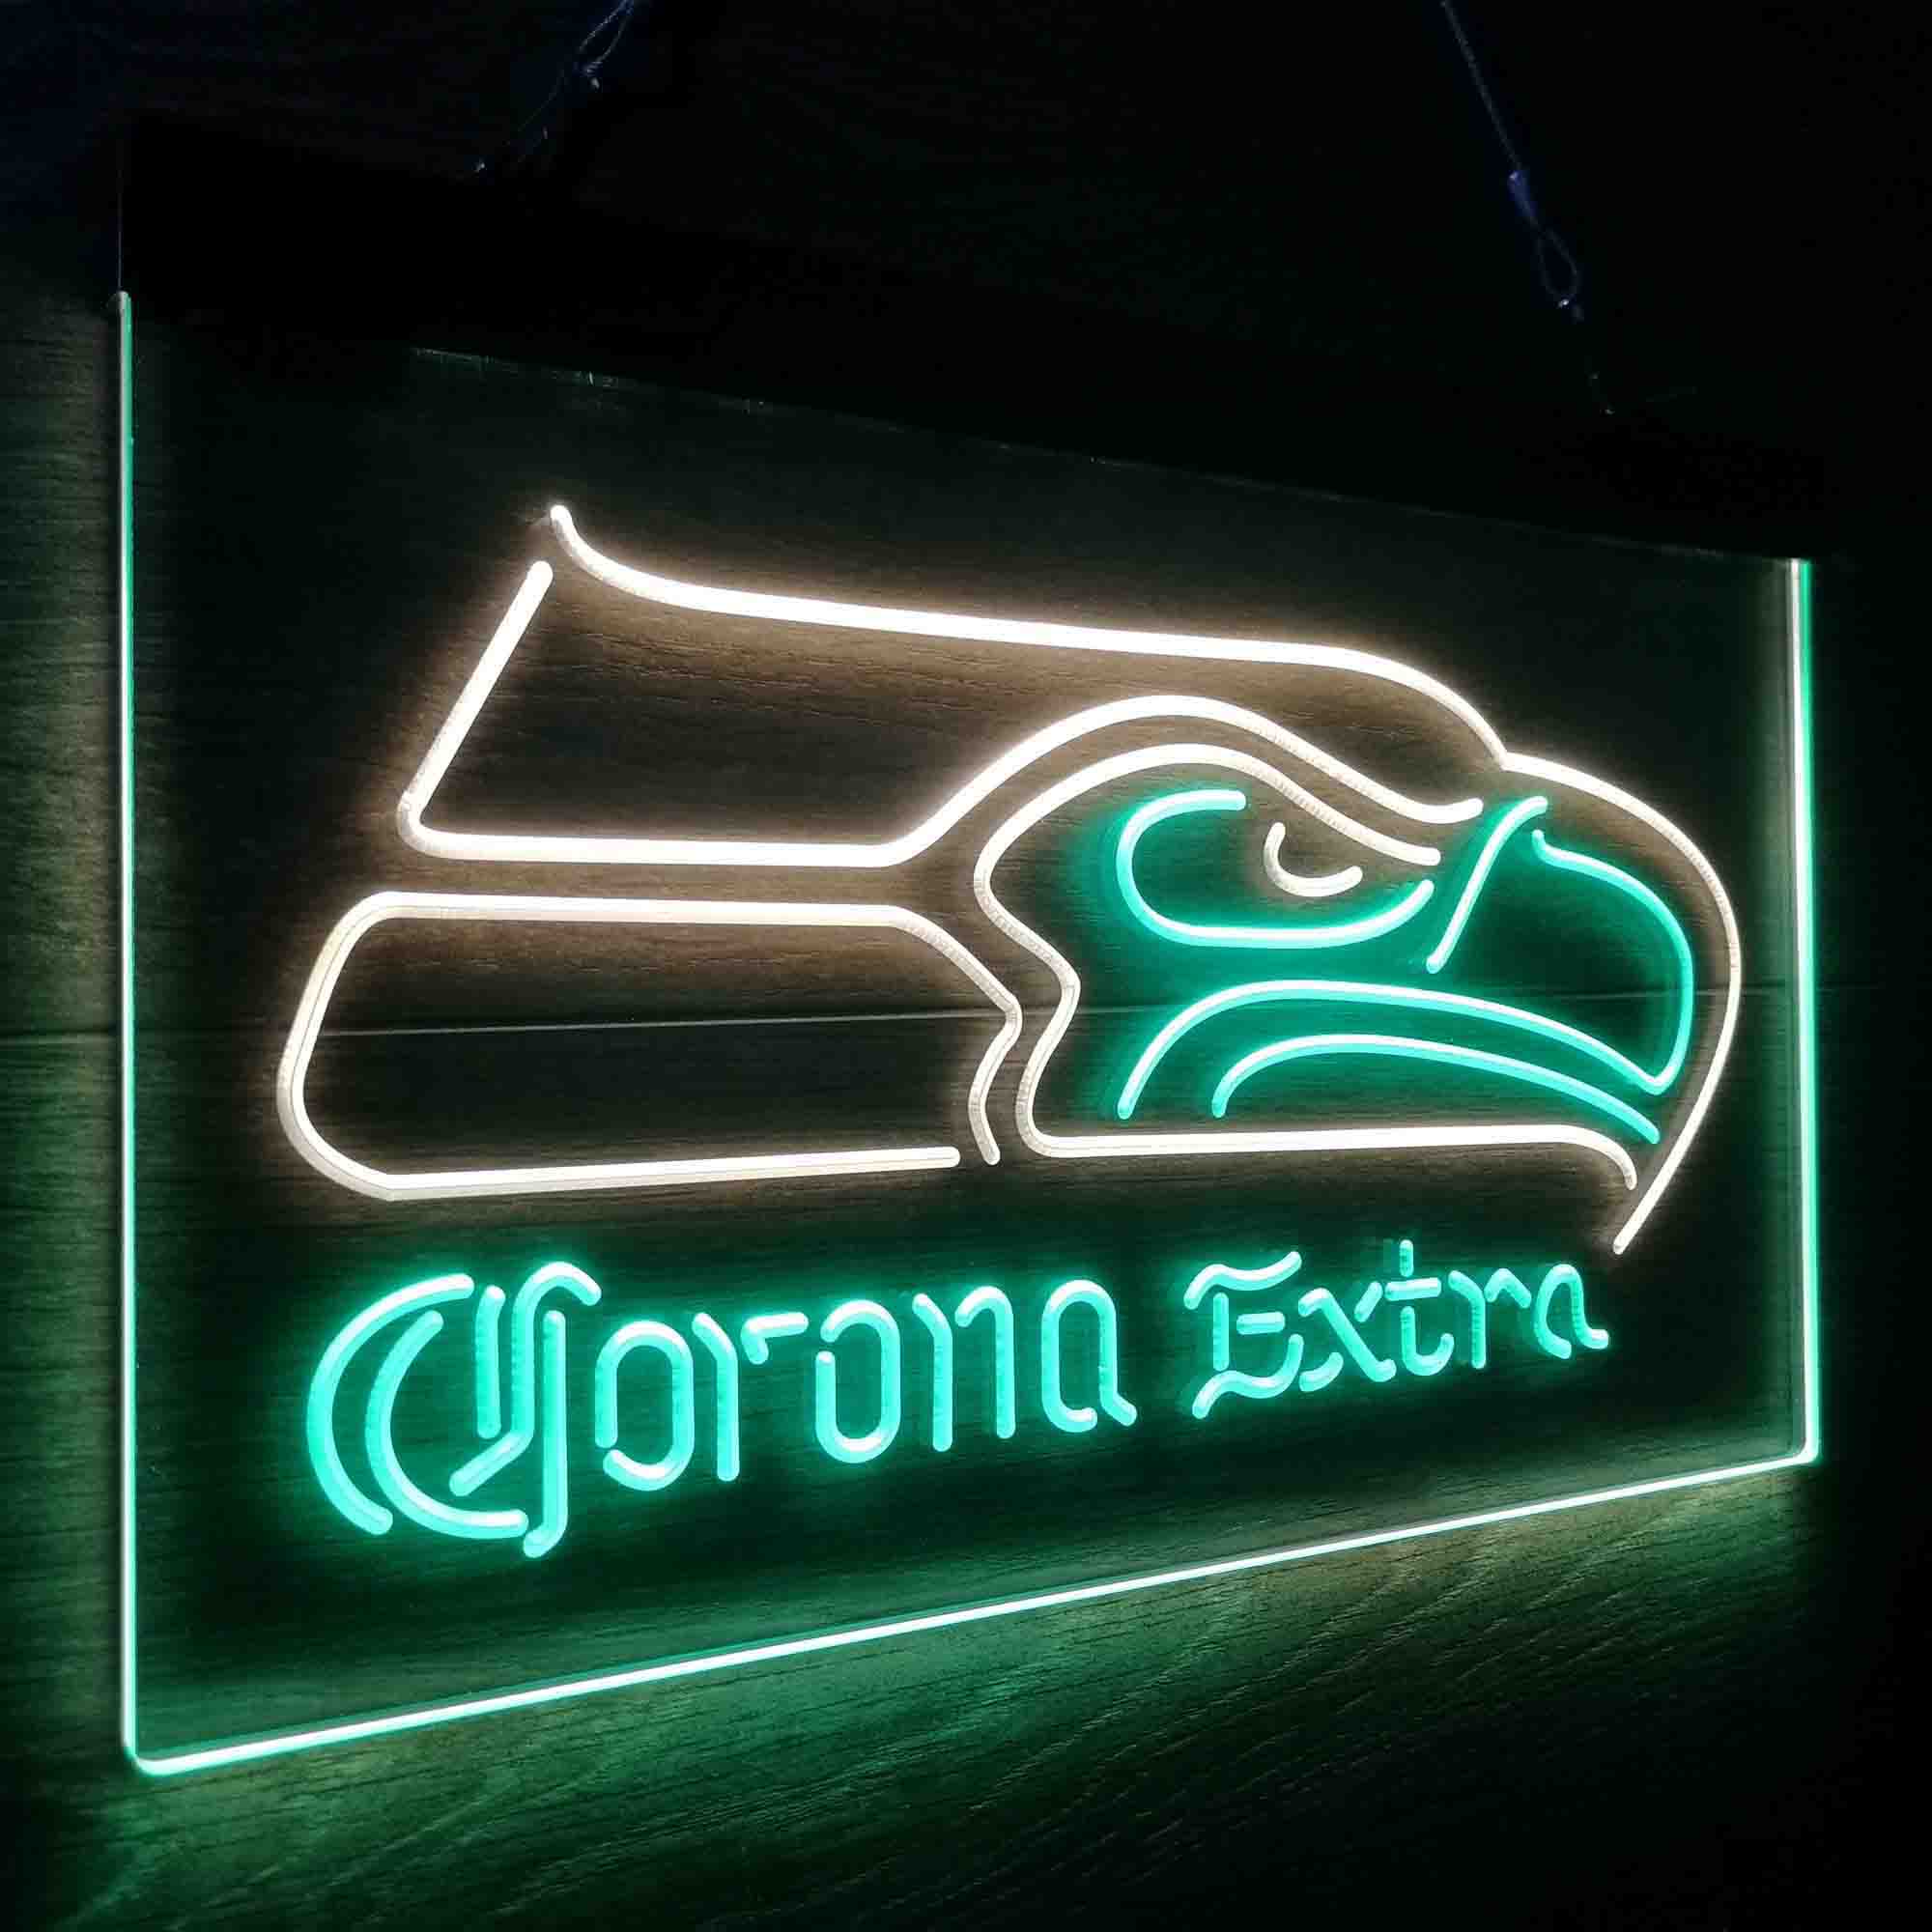 Corona Extra Bar Seattle Seahawks Est. 1976 LED Neon Sign